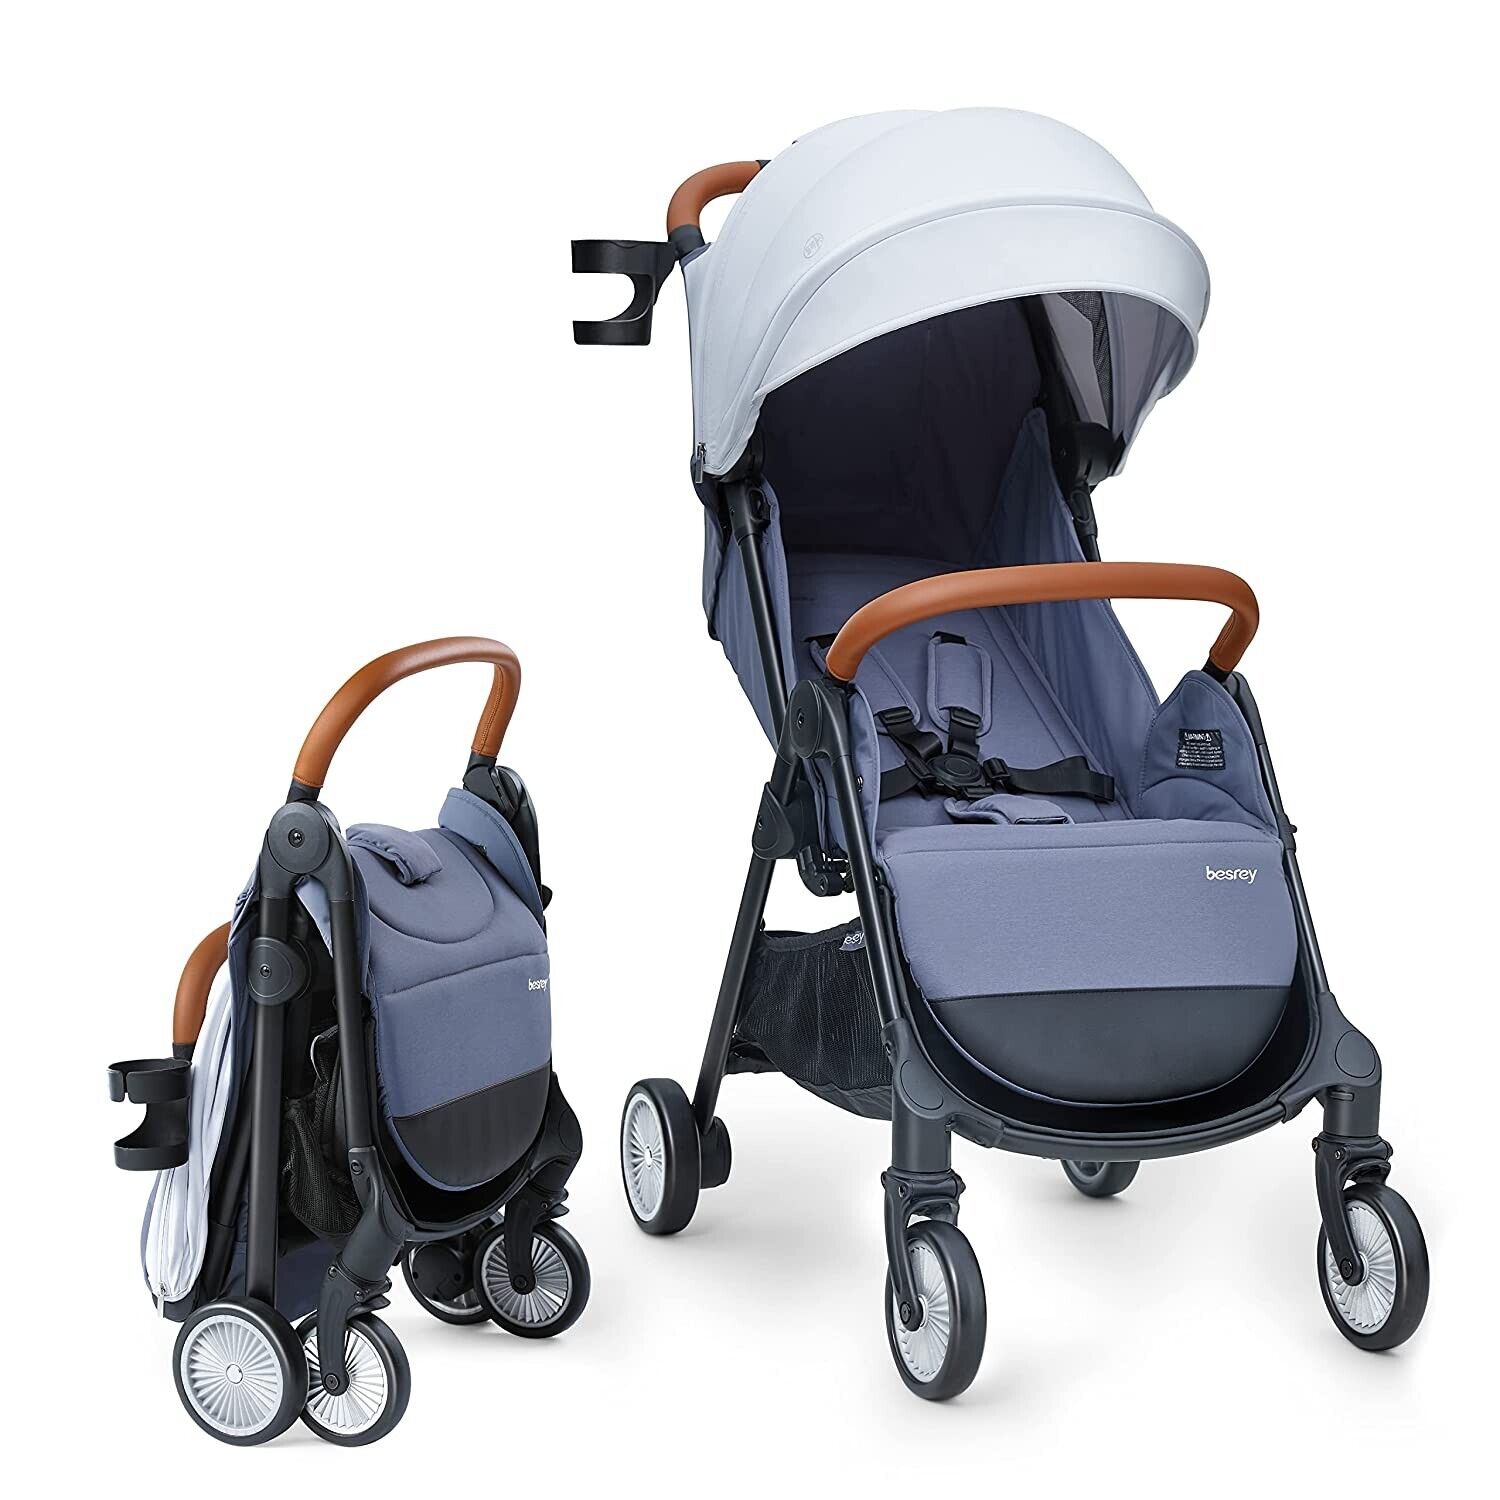 besrey Lightweight Baby Stroller Travel Stroller with One-Hand Easy Fold Full...